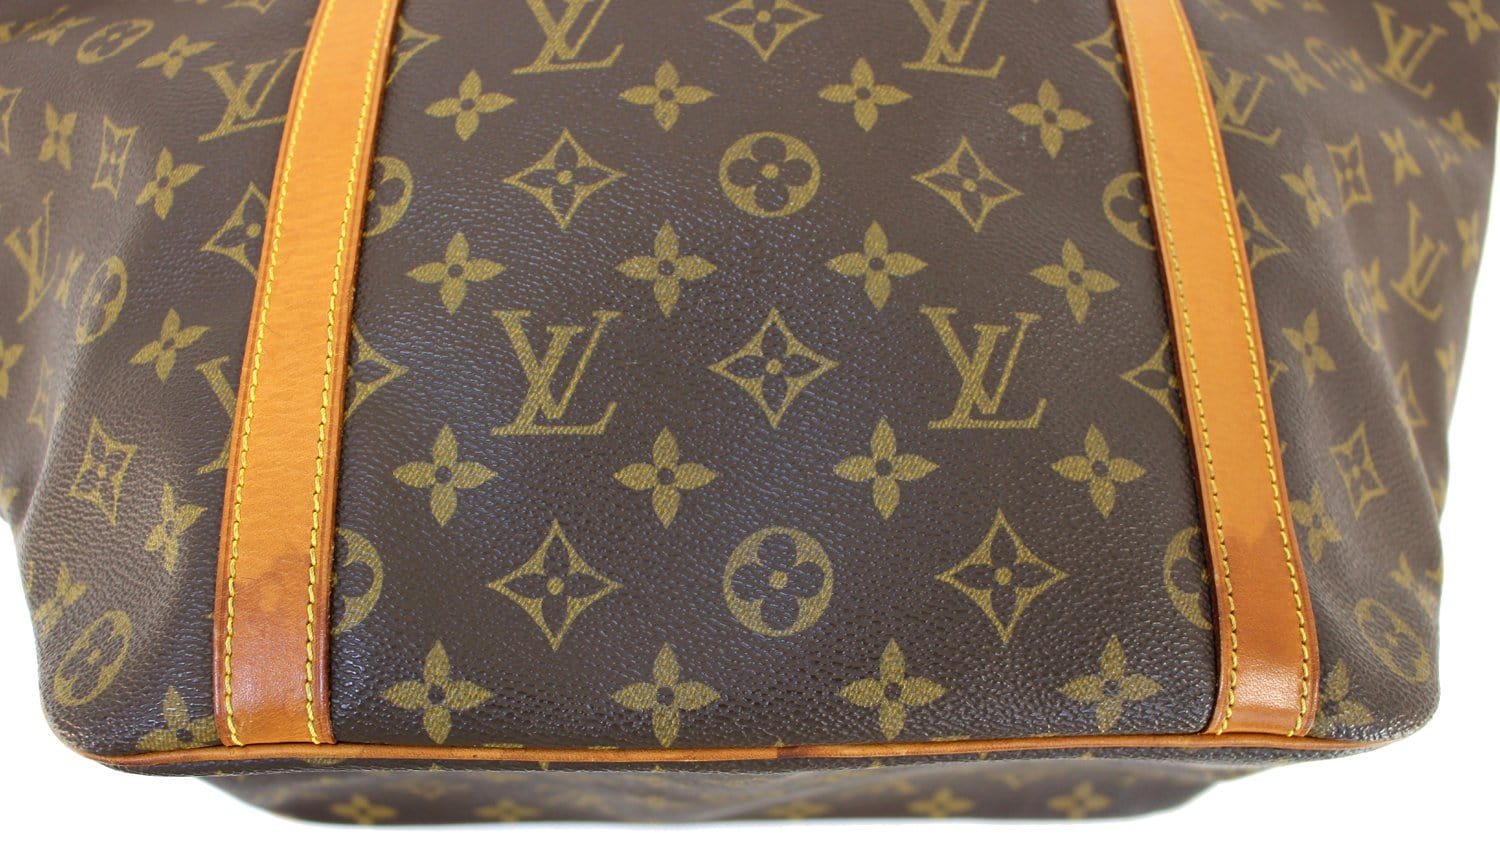 Discontinued Bag #7: Louis Vuitton Monogram Sac Shopping Large Tote